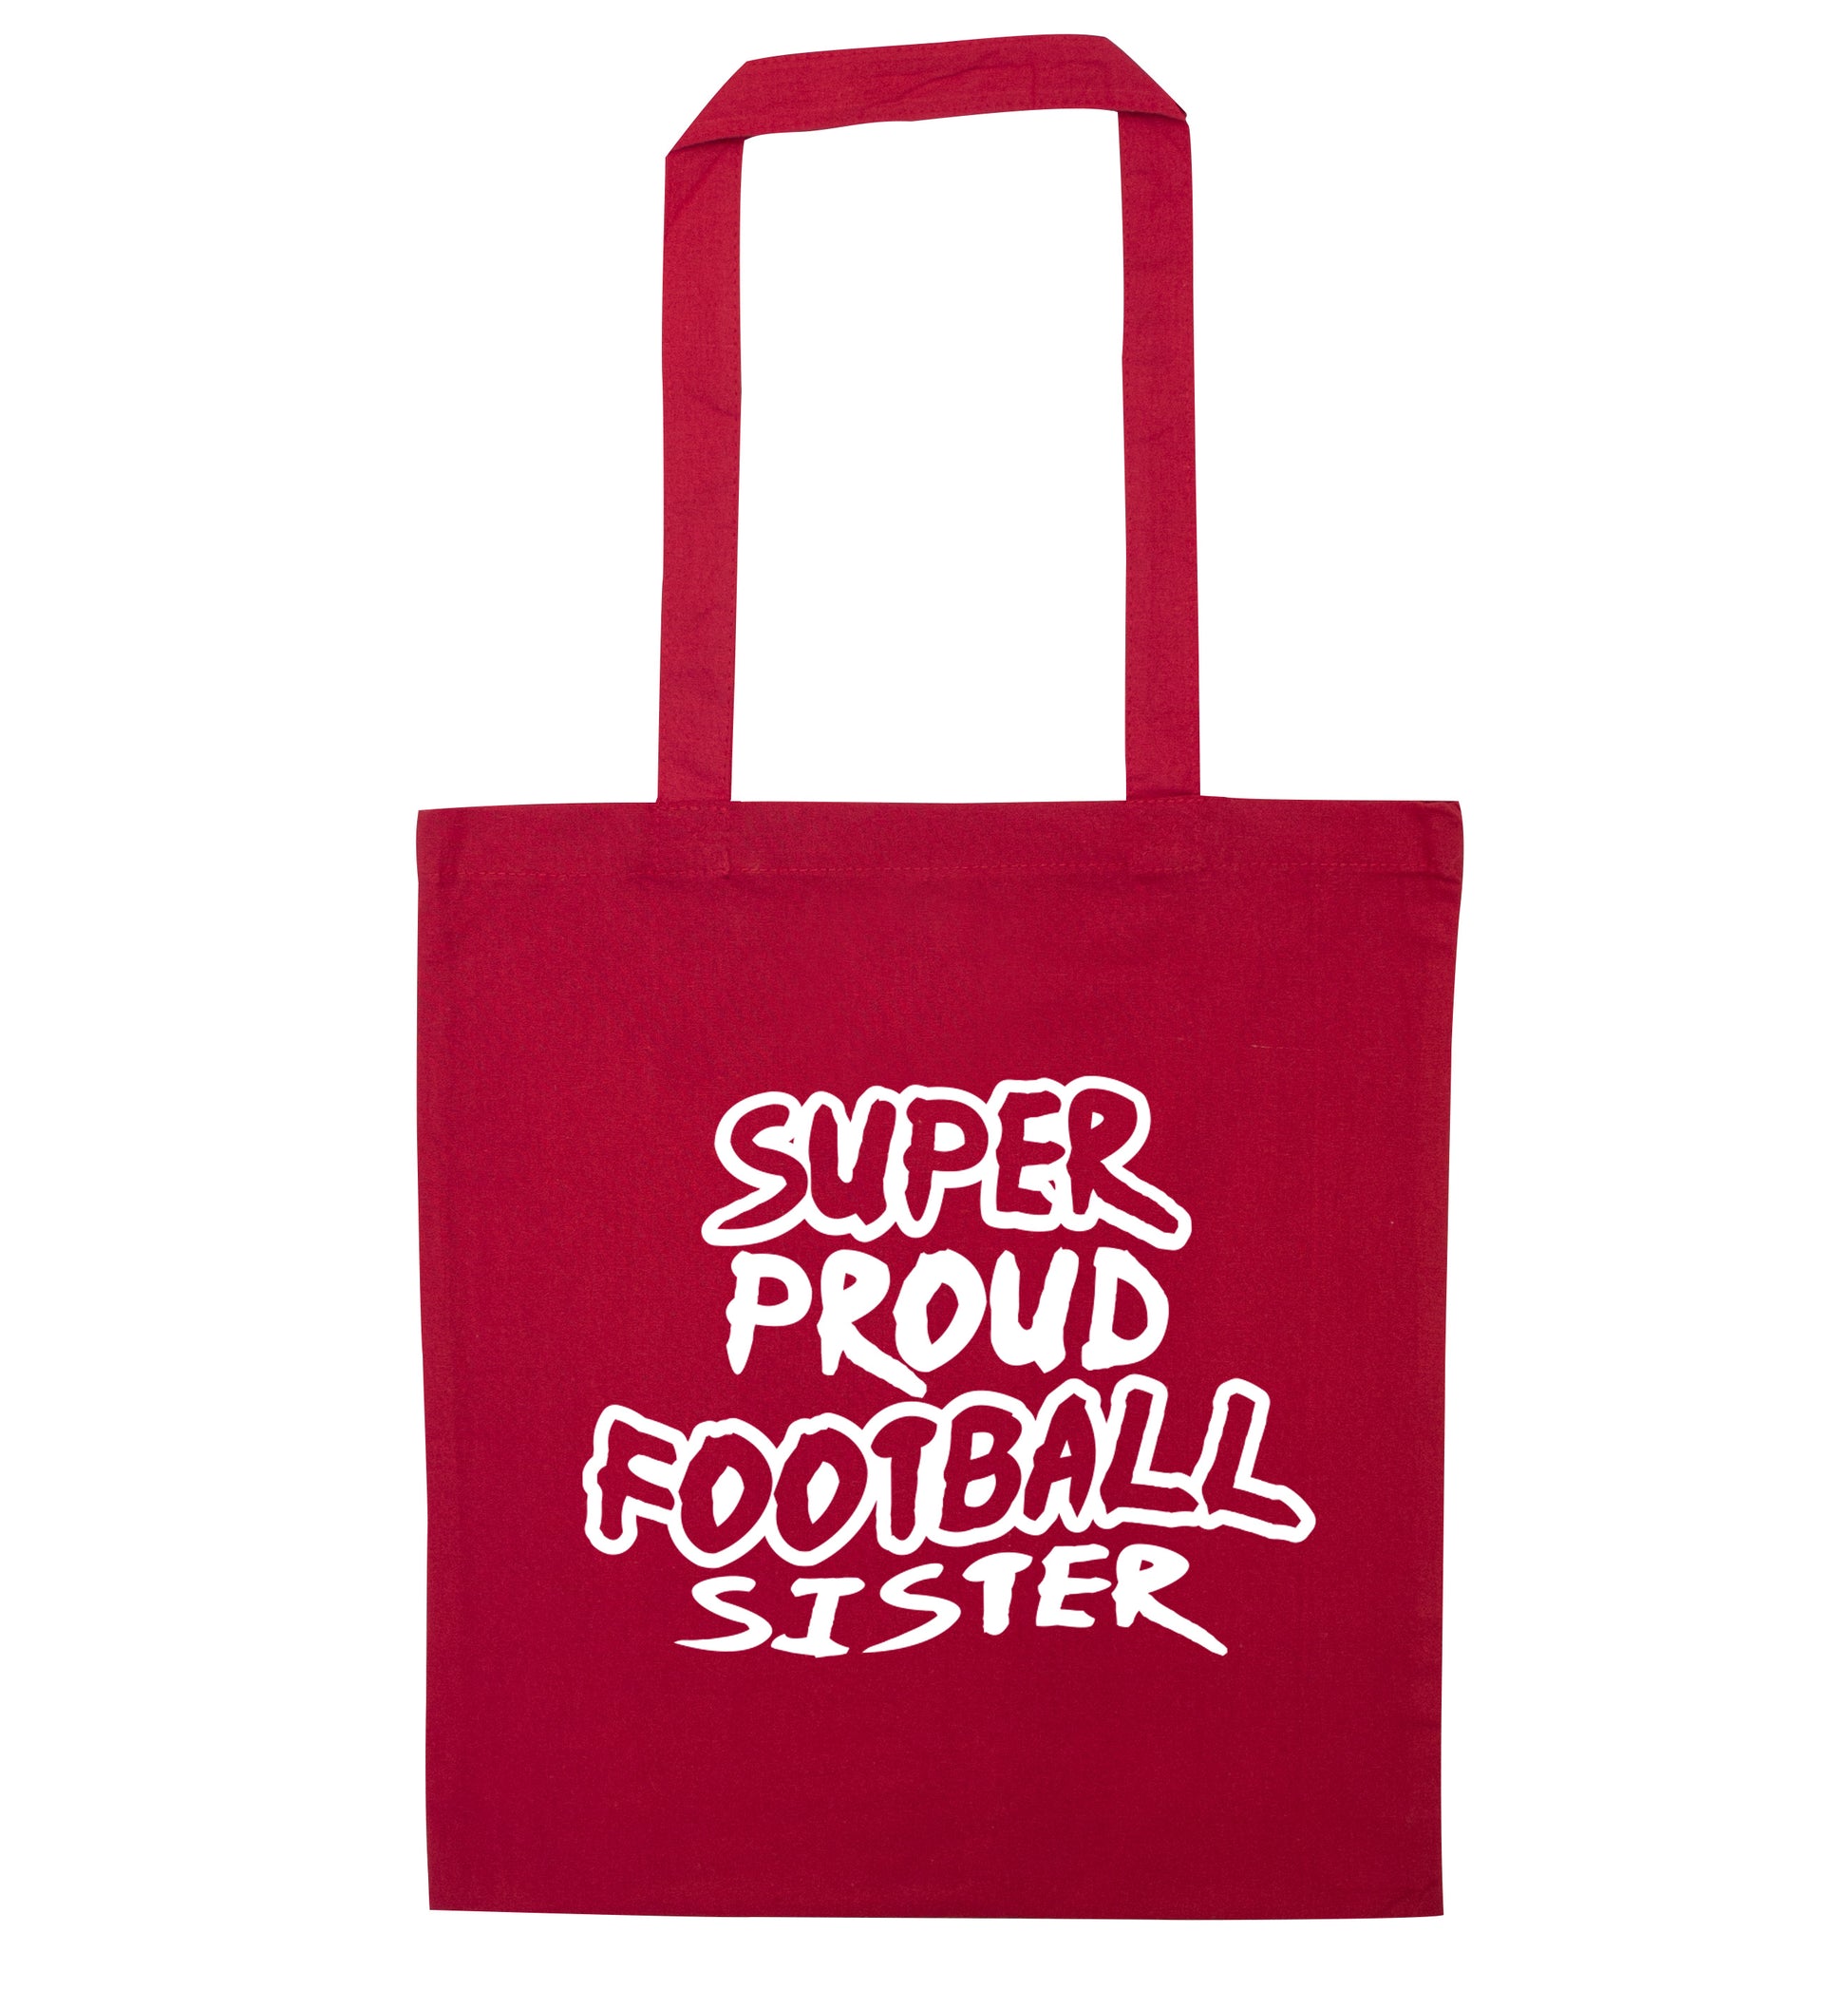 Super proud football sister red tote bag